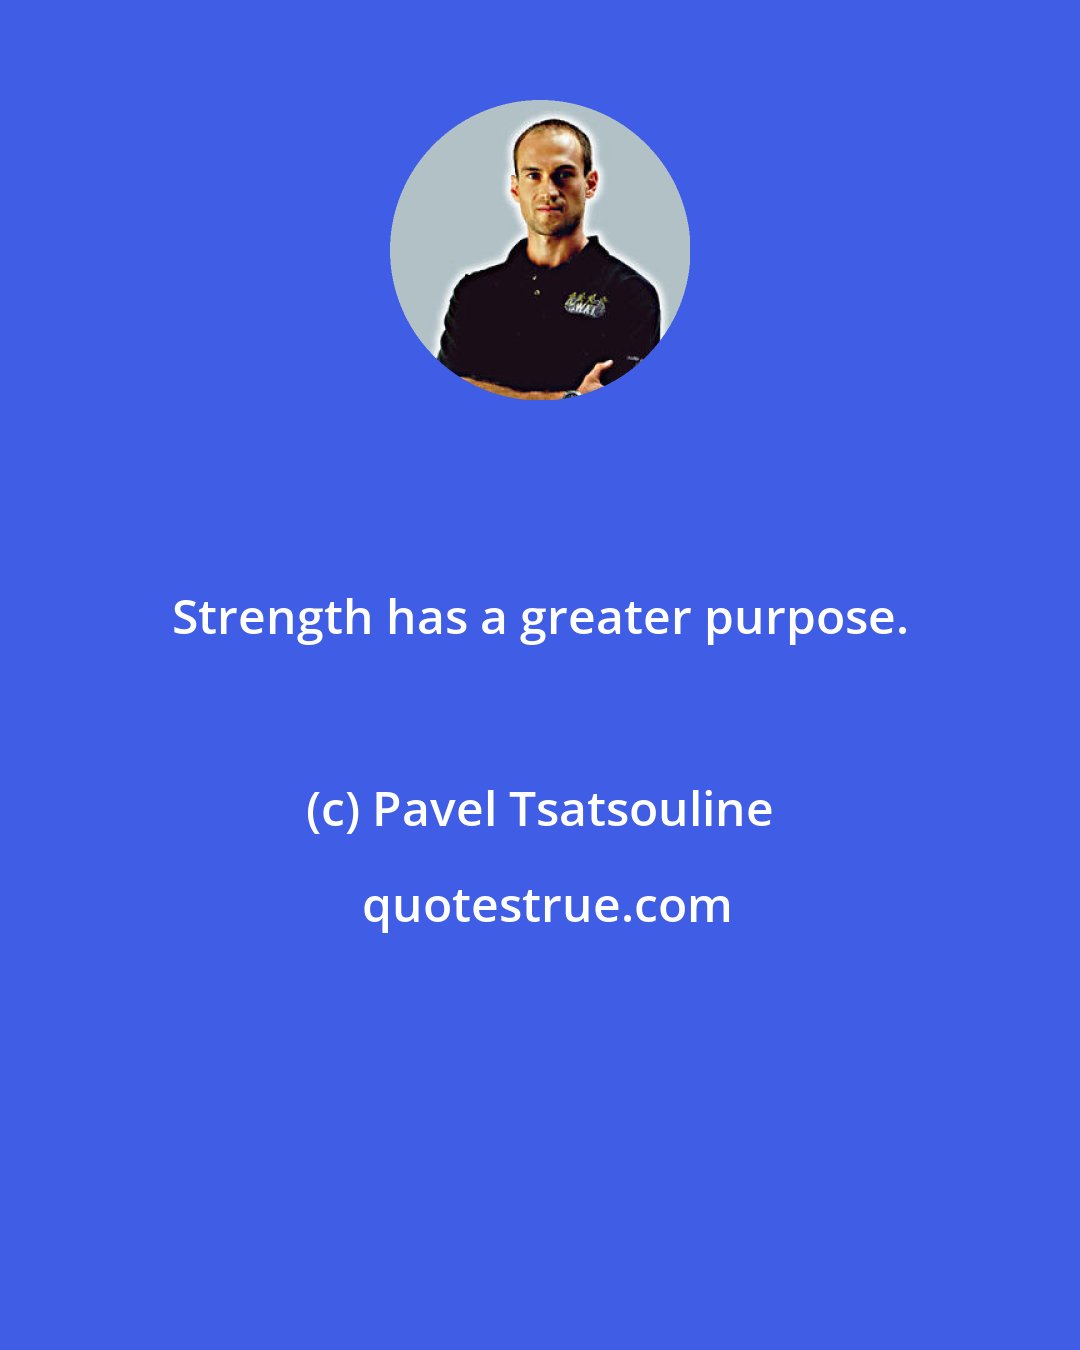 Pavel Tsatsouline: Strength has a greater purpose.